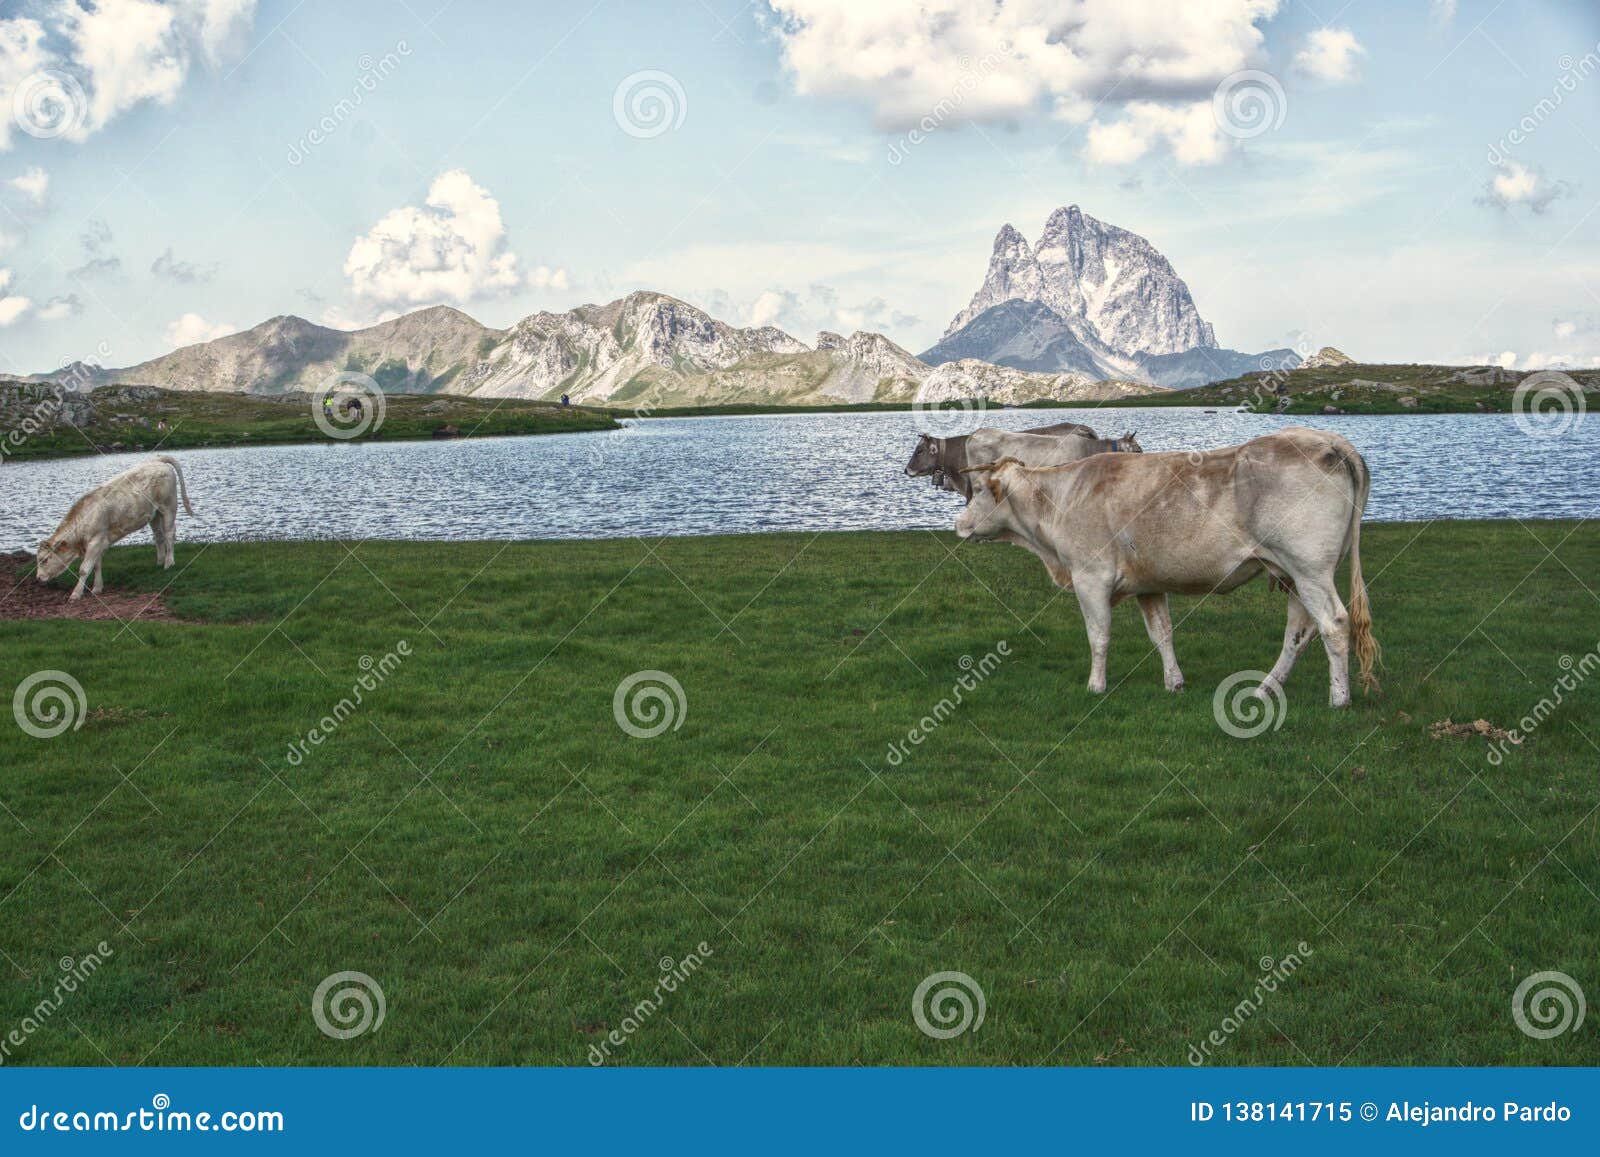 beautiful lake in pirineos mountains and animals.